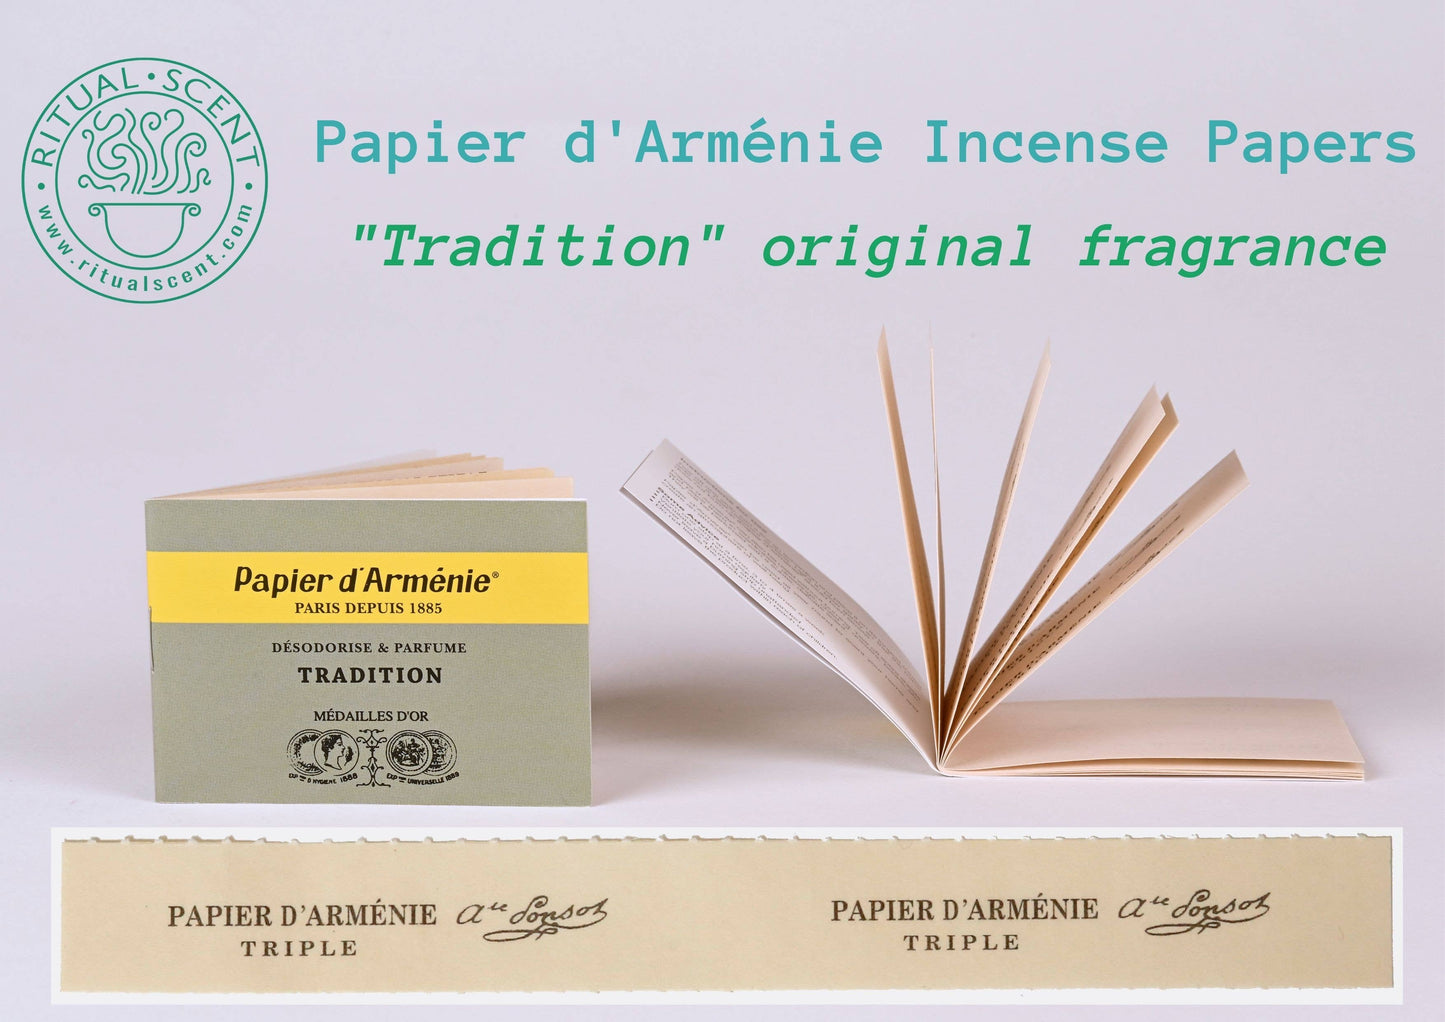 Papier d'Armenie "Tradition" French Incense Paper Booklet